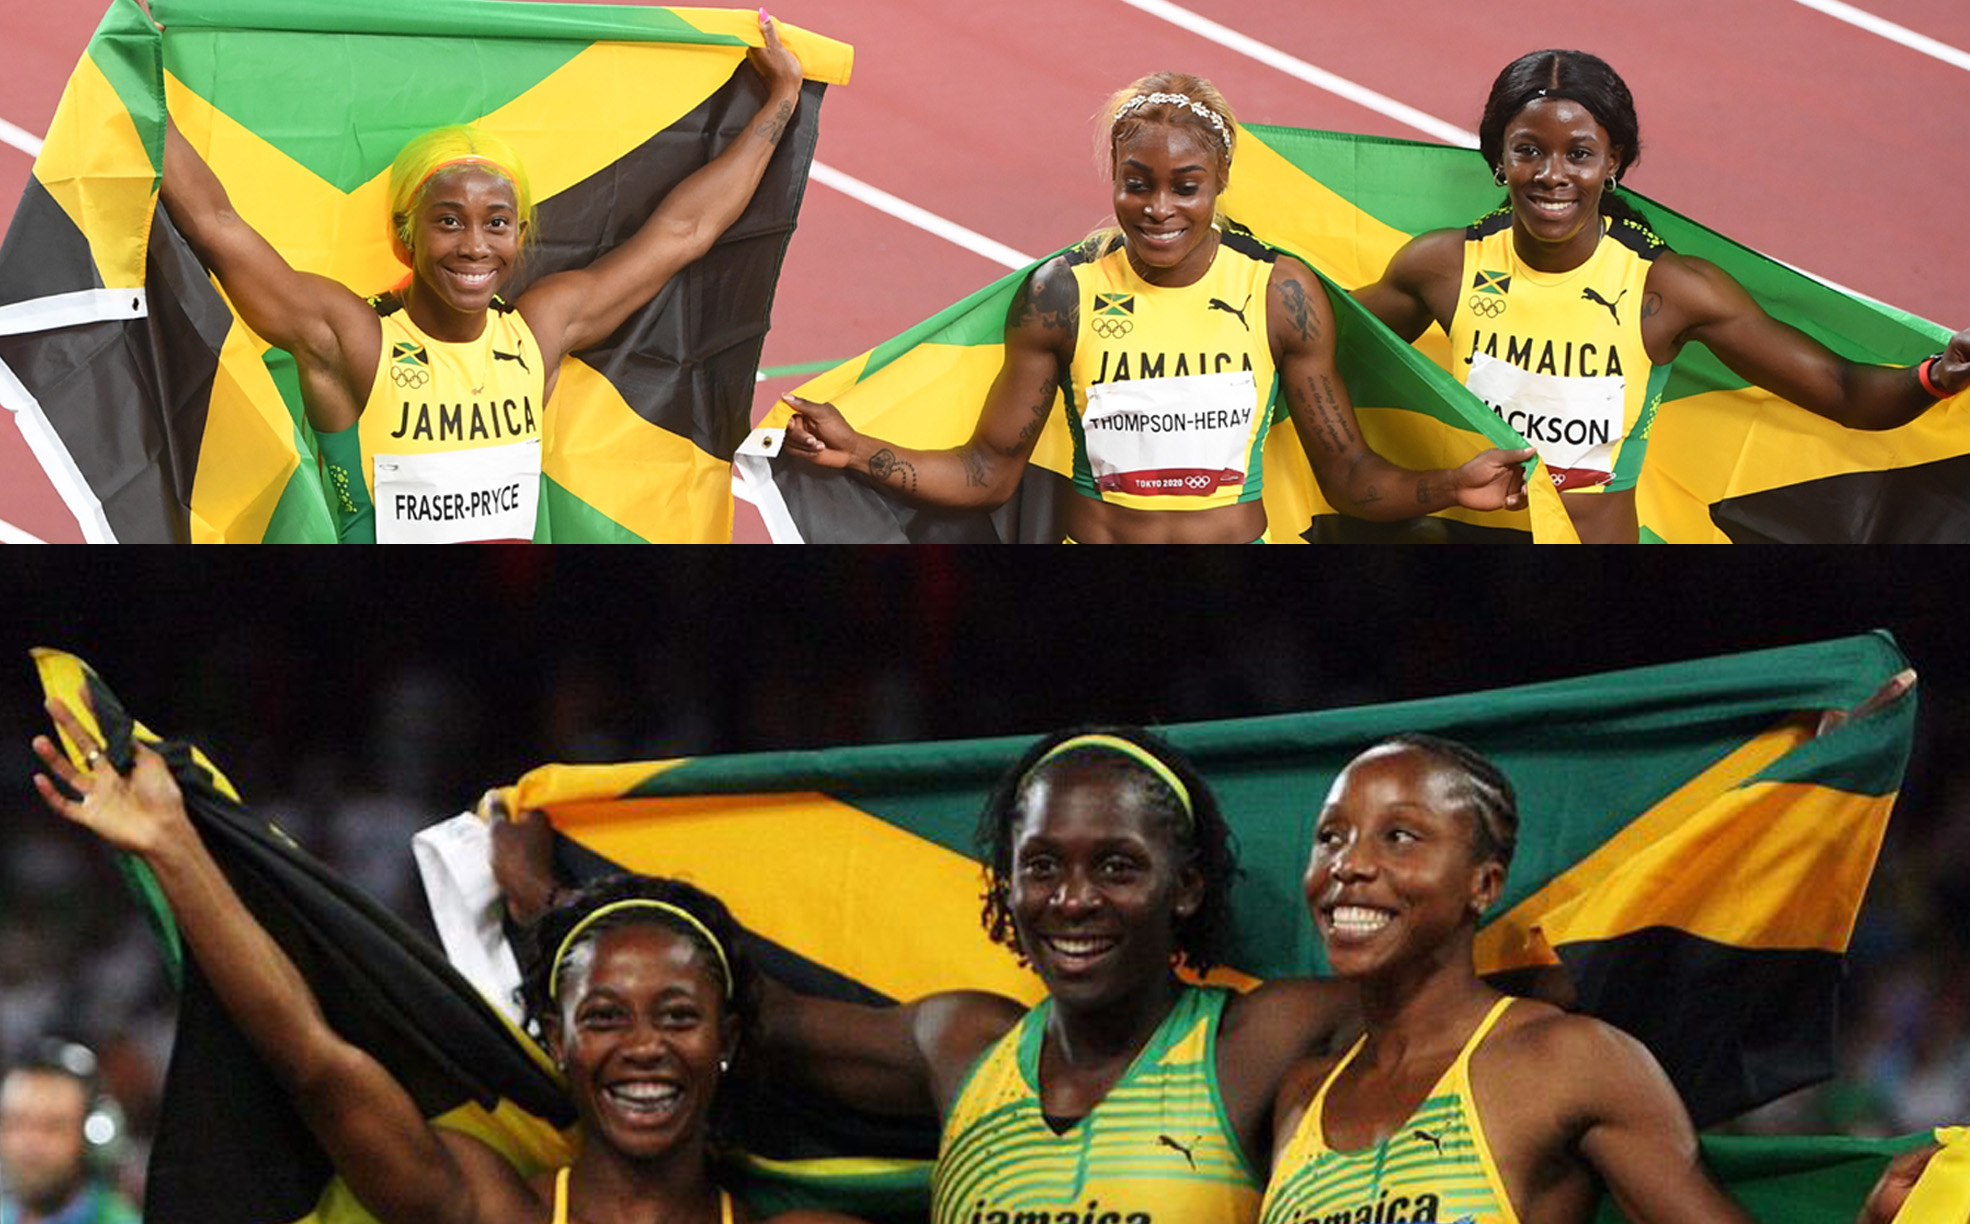 Jamaica short sprint Beijing 2008 and Tokyo 2020 100m sweep